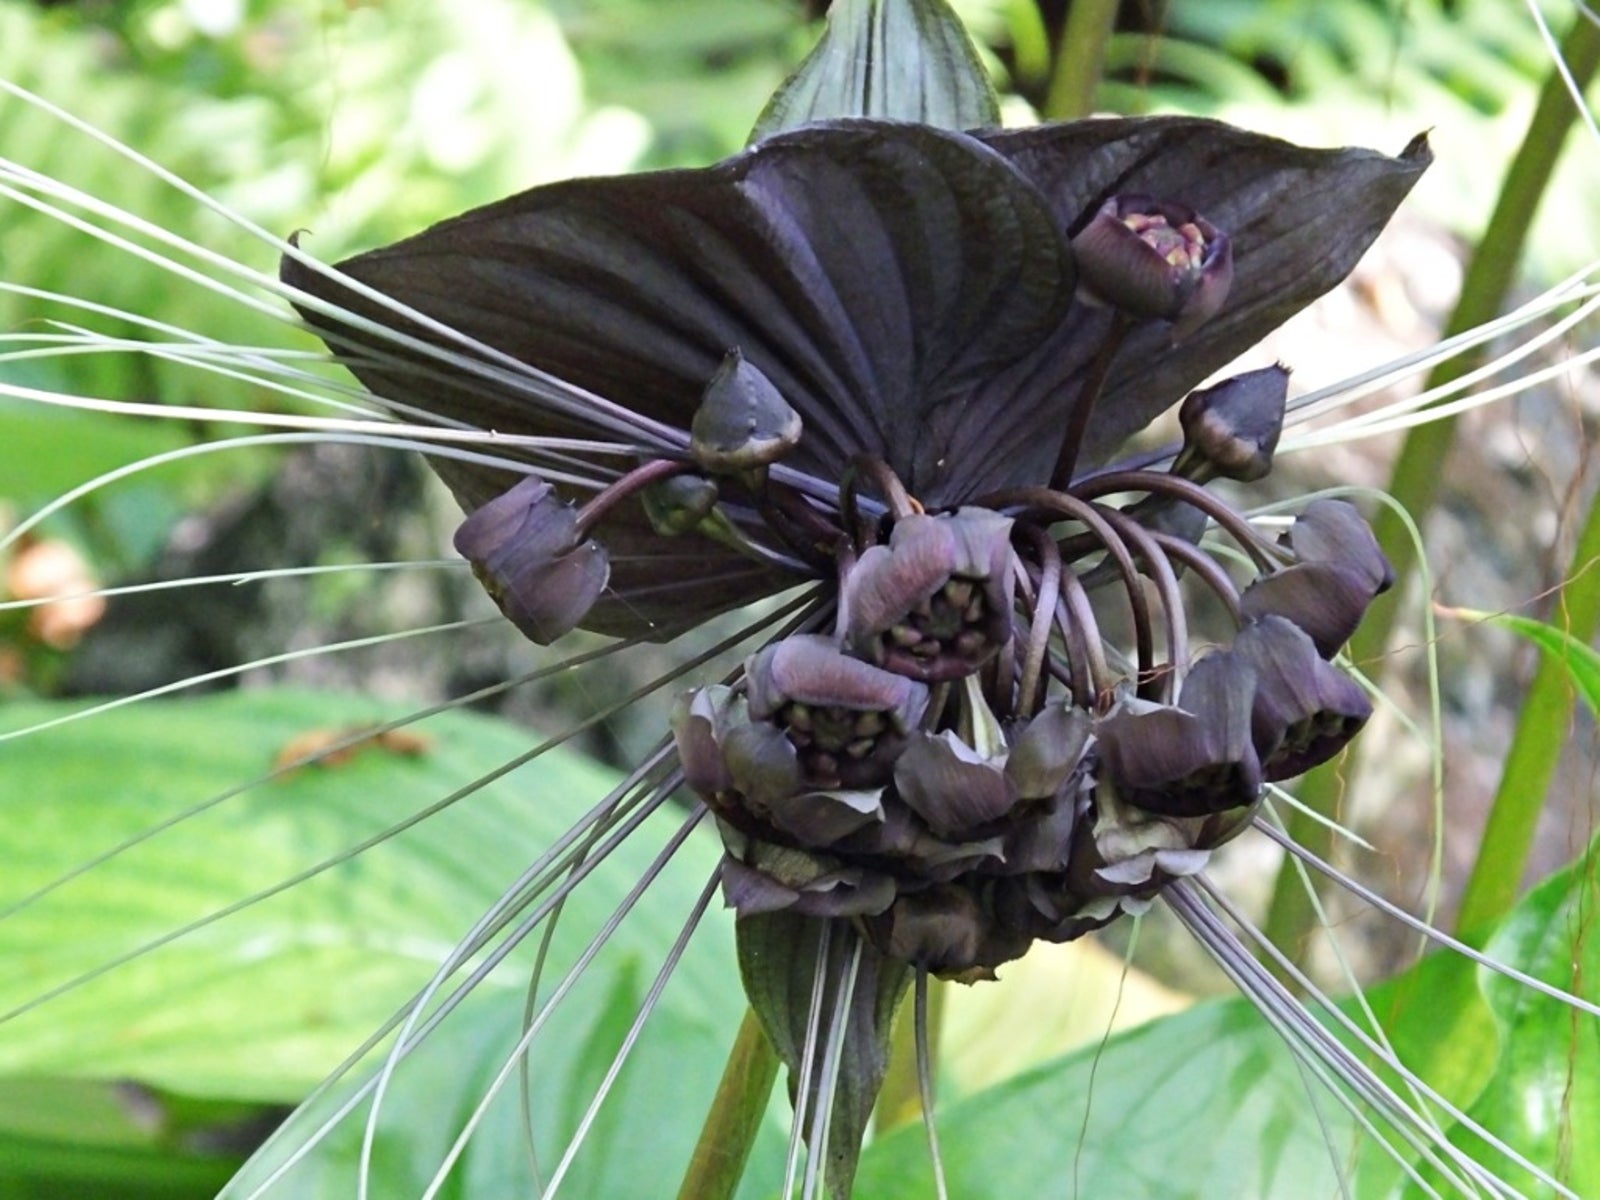 Flower of the Black Bat (Tacca chantrieri)